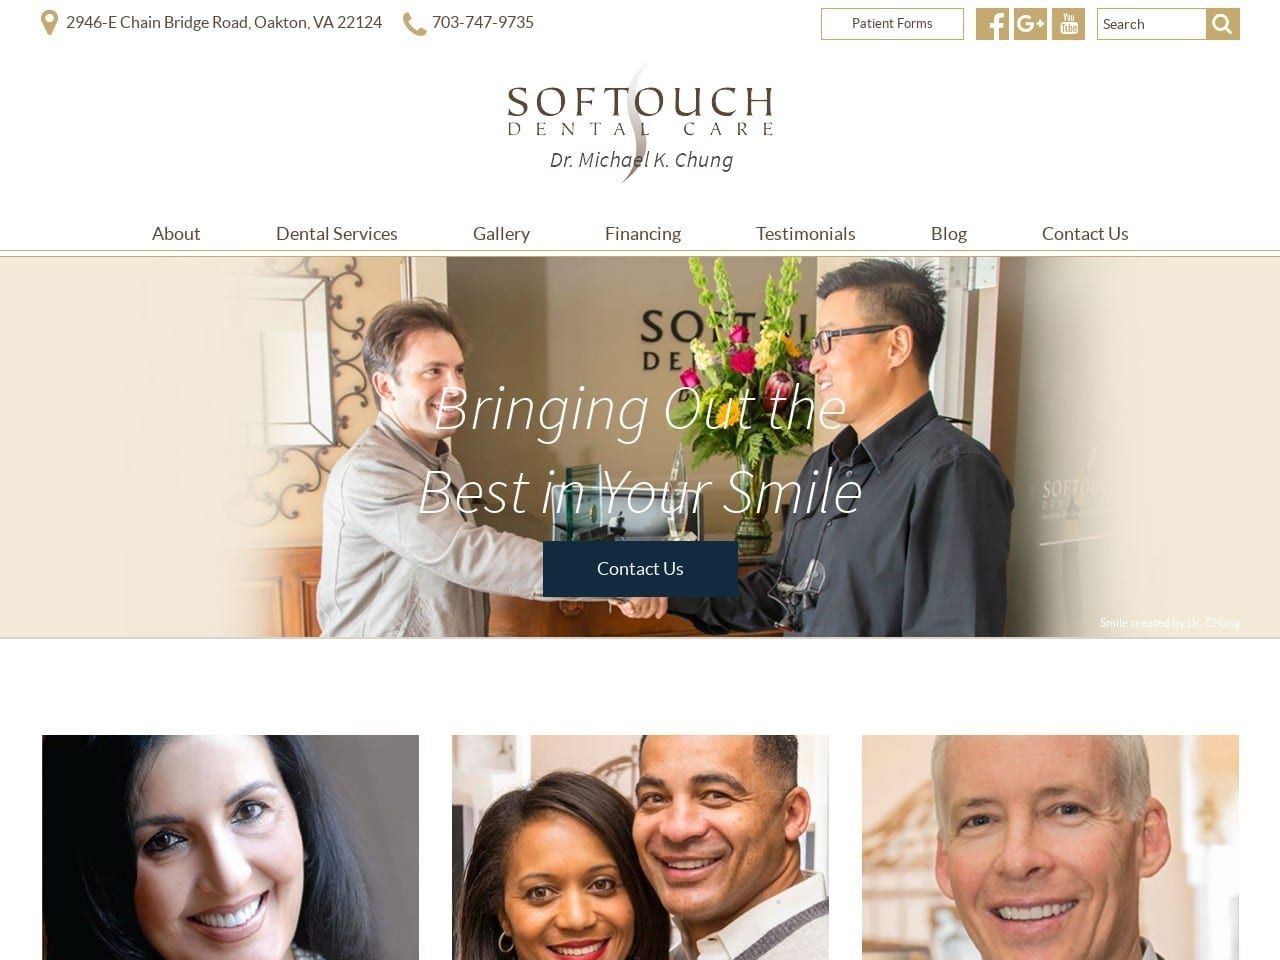 Softouch Dental Care Website Screenshot from softouchdentalcare.com